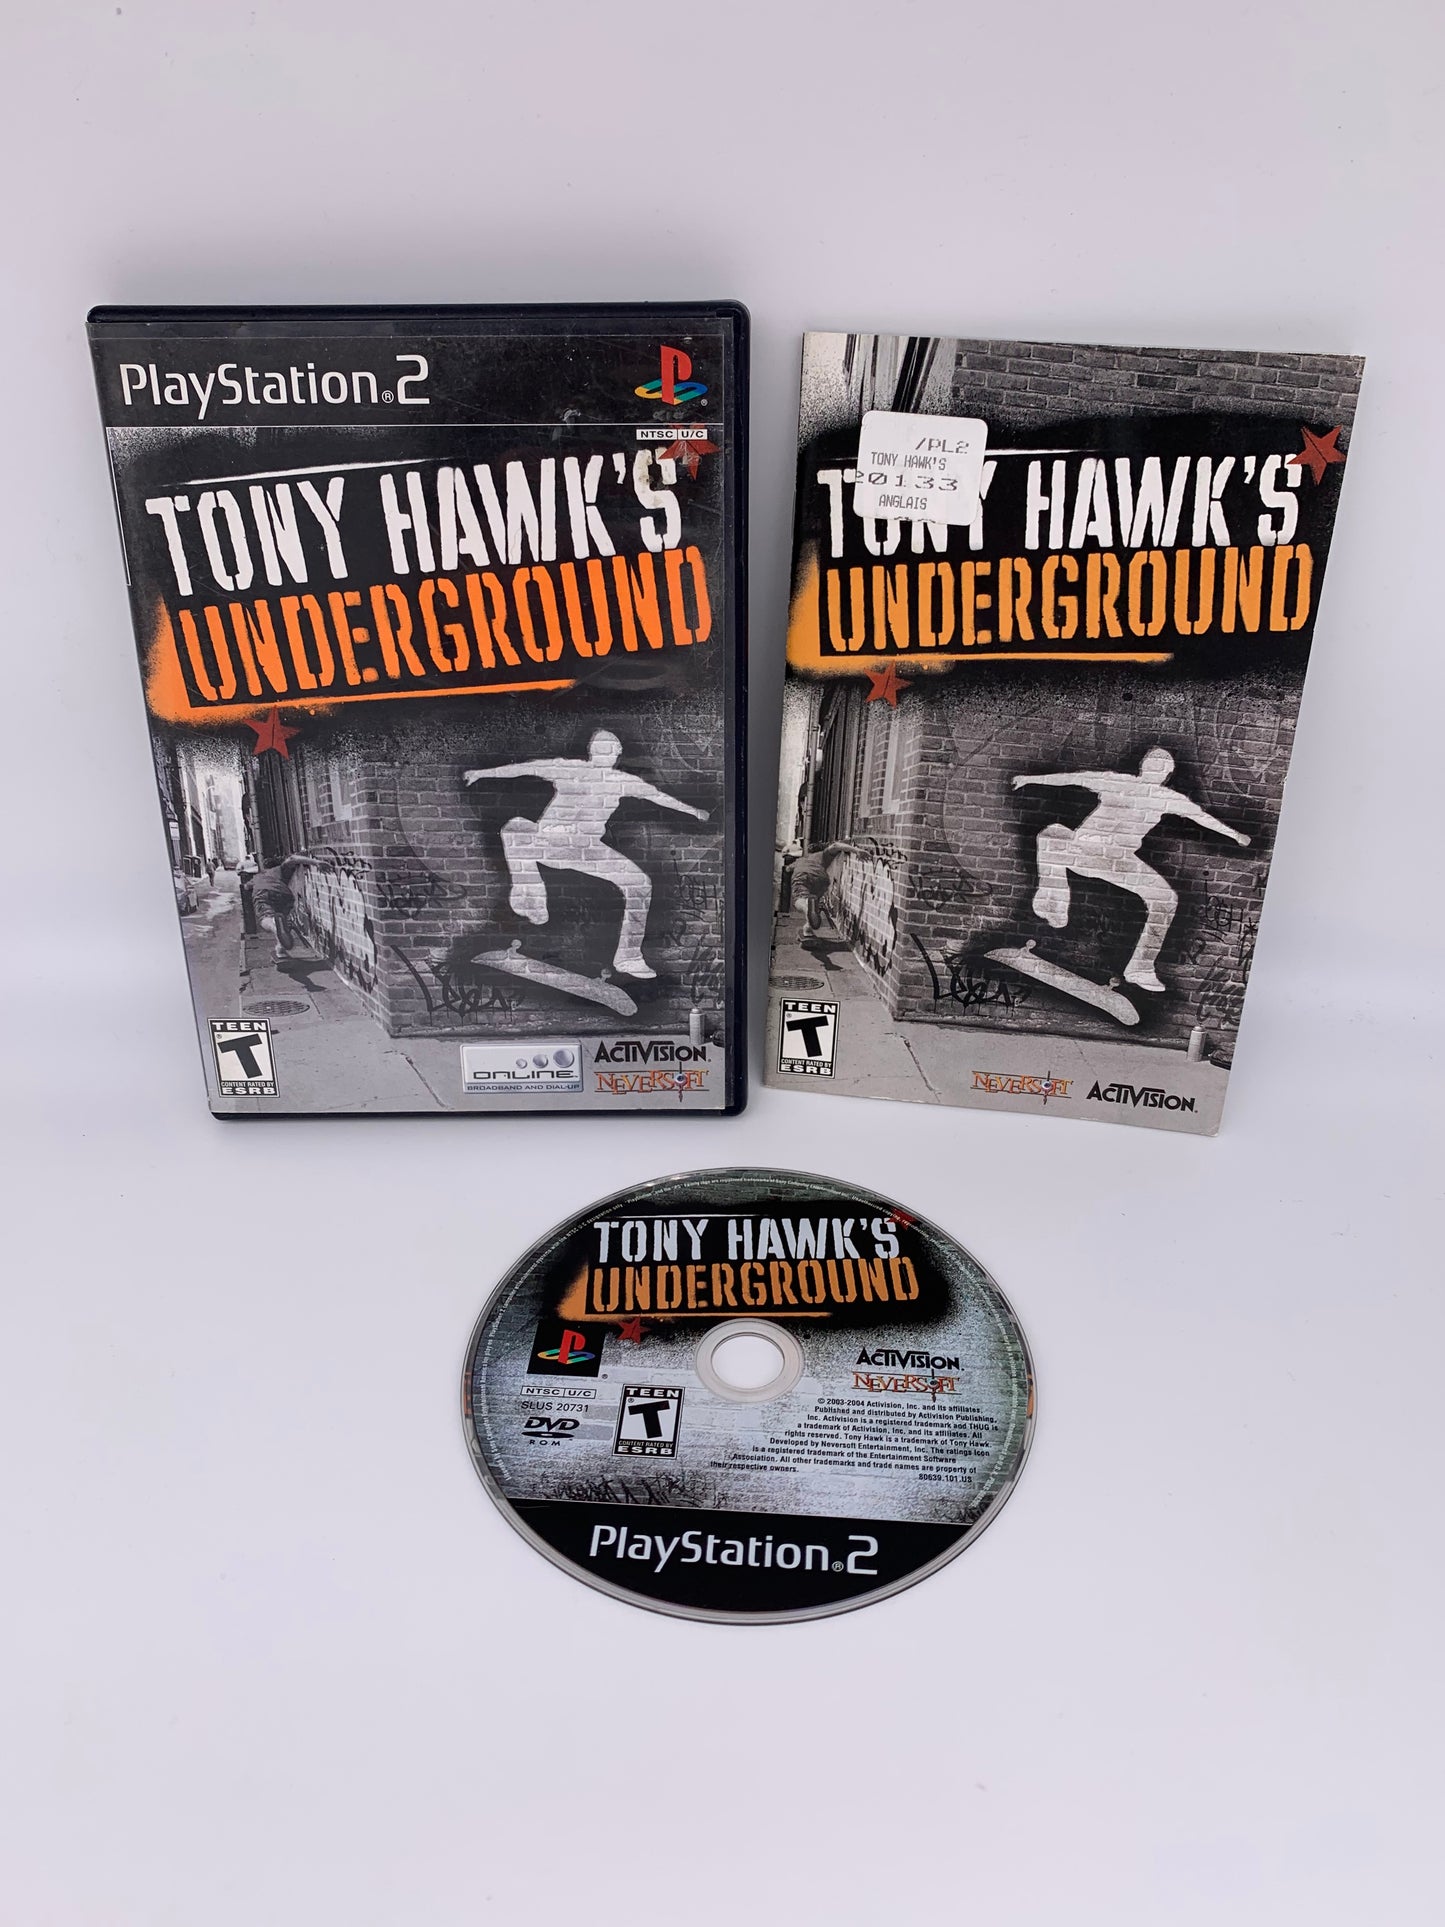 PiXEL-RETRO.COM : SONY PLAYSTATION 2 (PS2) COMPLET CIB BOX MANUAL GAME NTSC TONY HAWK'S UNDERGROUND